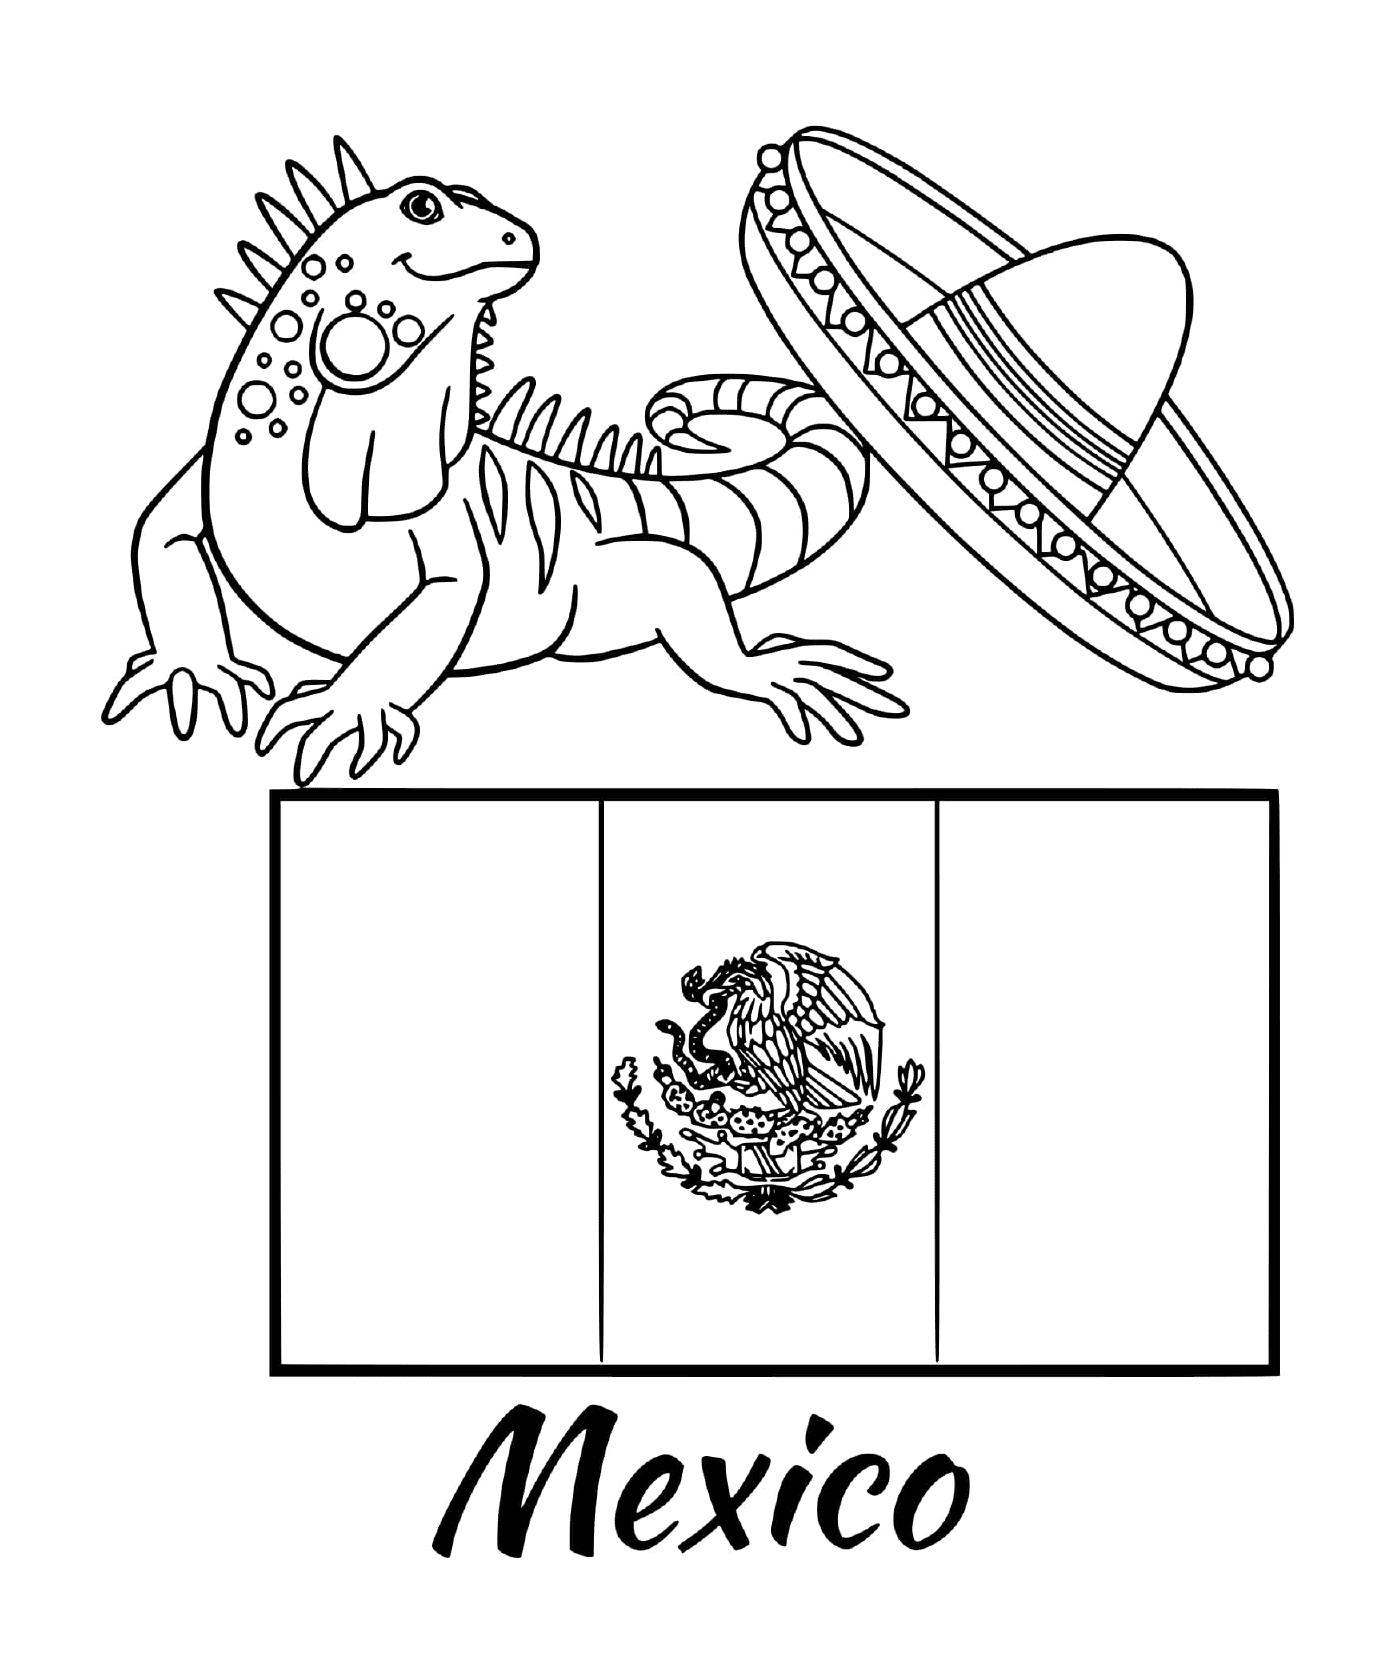  Mexico flag with a iguana 